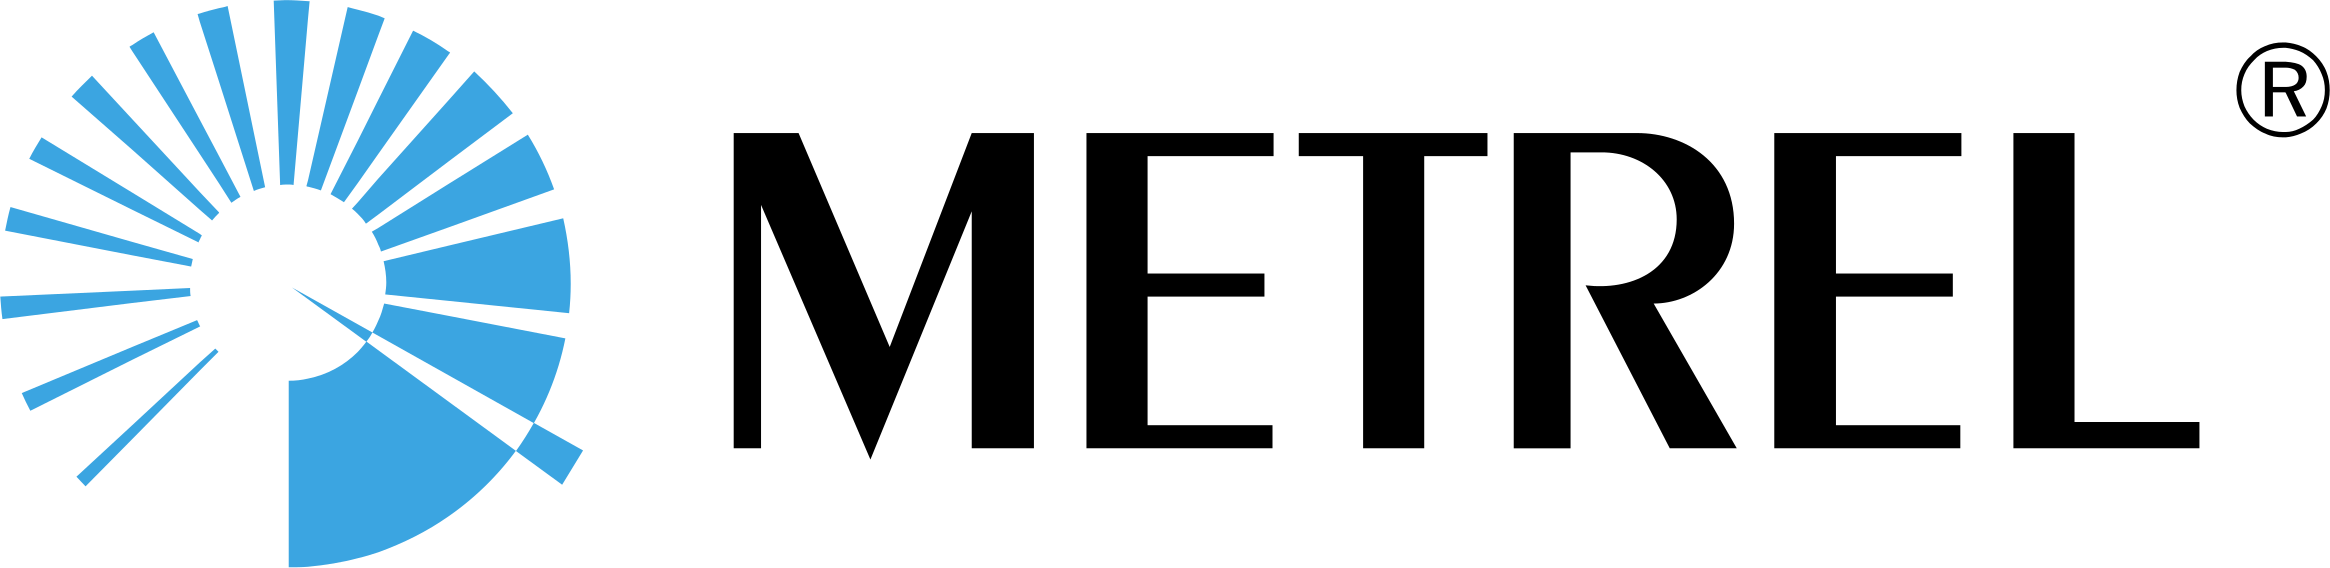 GMC instruments logo